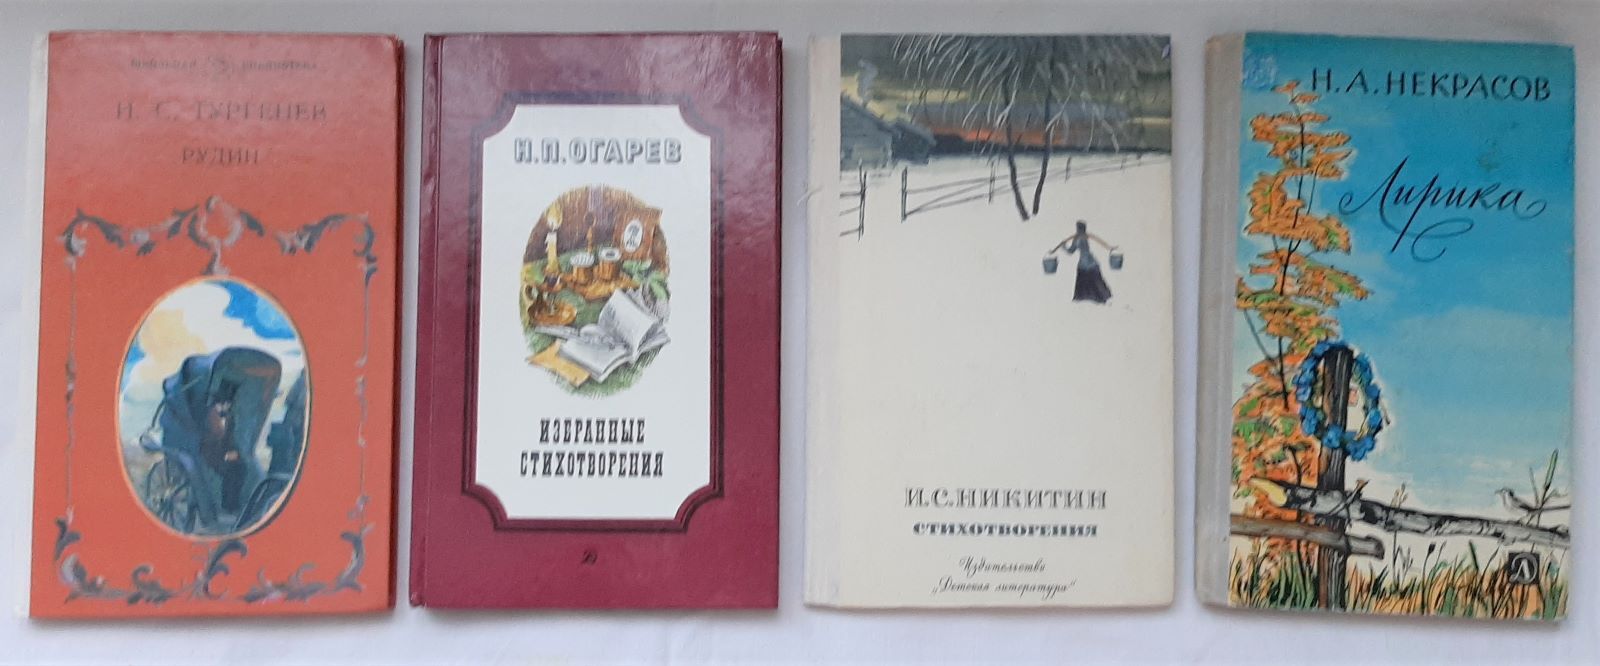 Книги вадима огарева. Никитин стихотворения 1988.